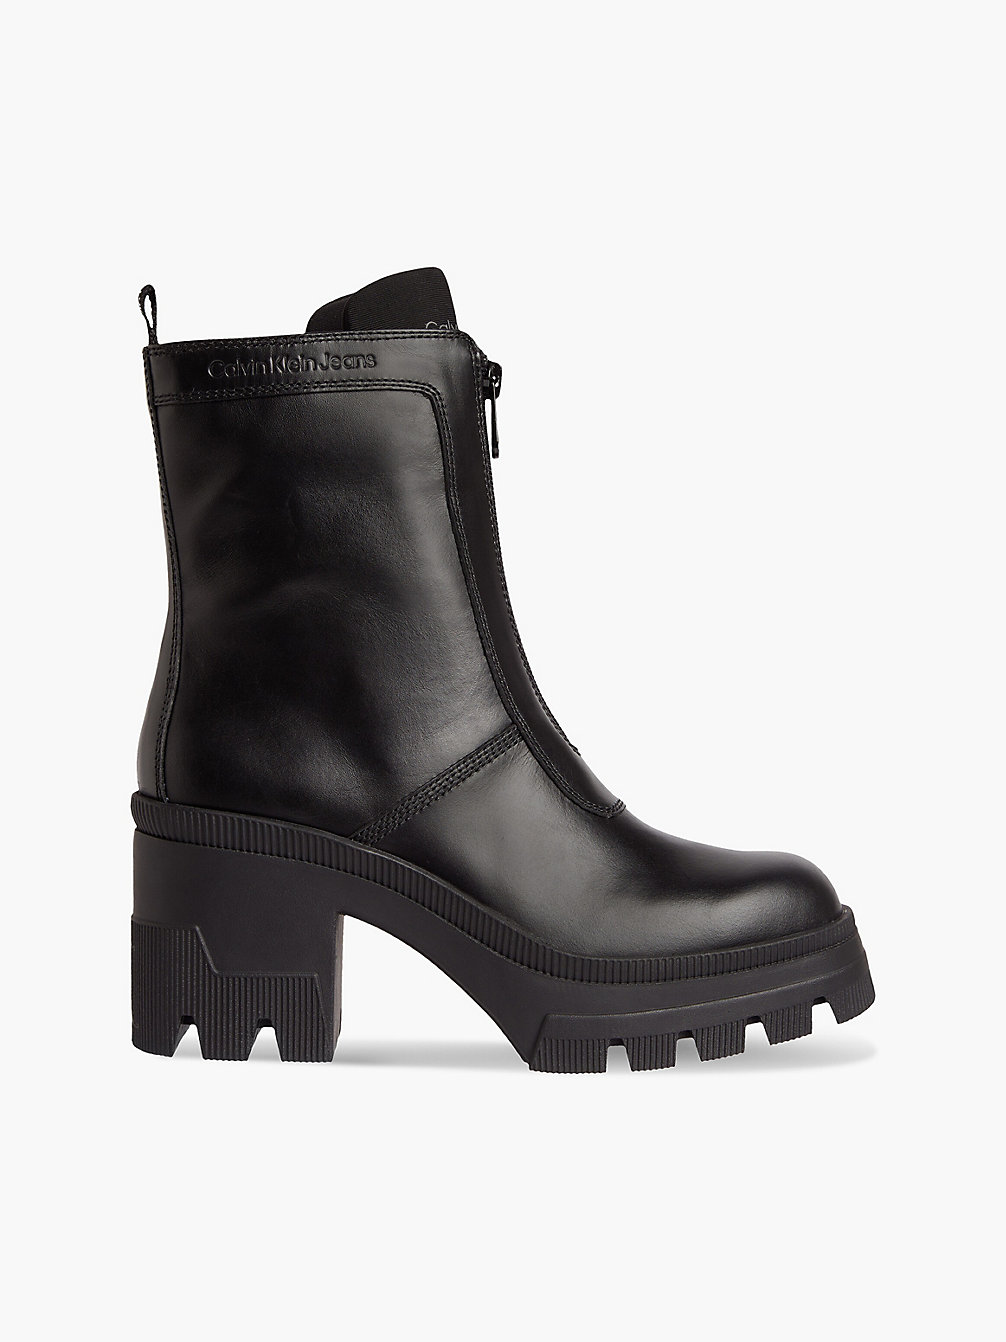 BLACK > Кожаные массивные сапоги на каблуках > undefined Женщины - Calvin Klein